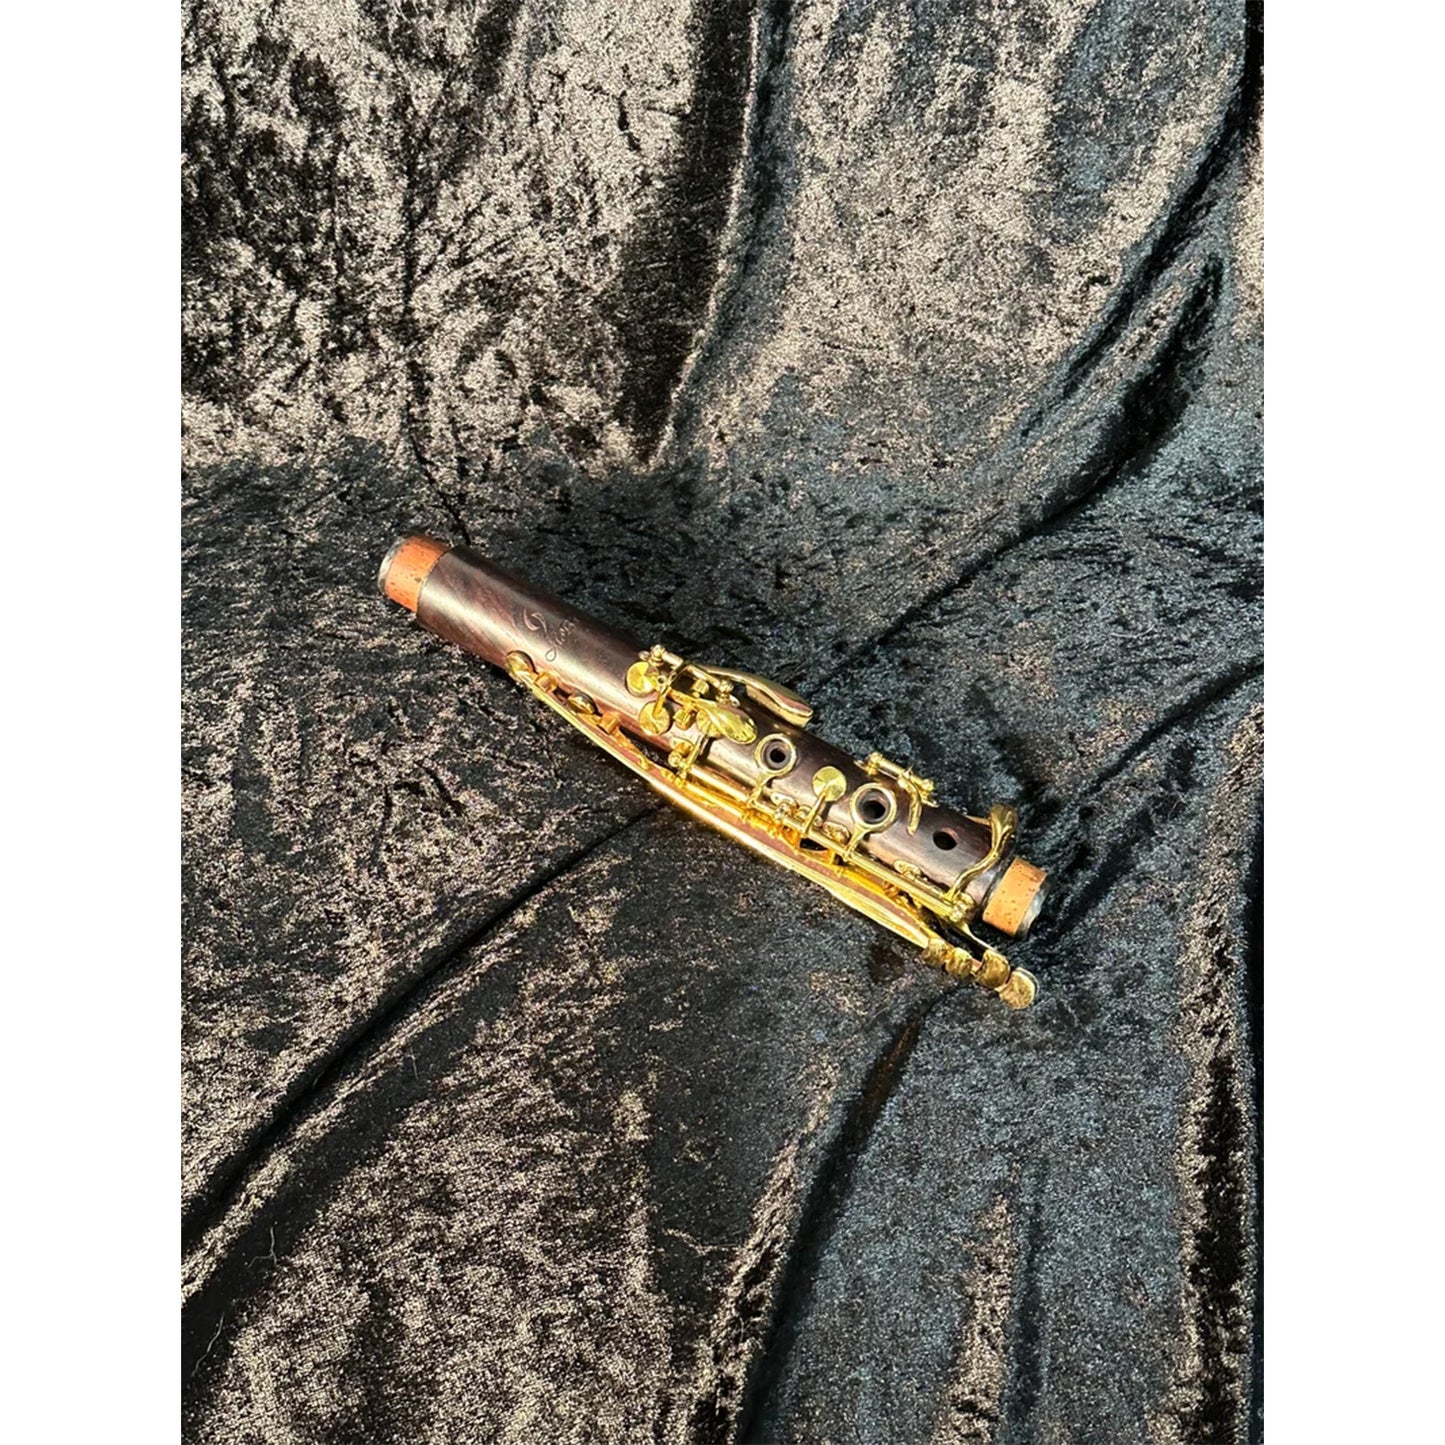 Upper joint of cocobolo Backun clarinet with gold keys, resting on black velvet background in bright light